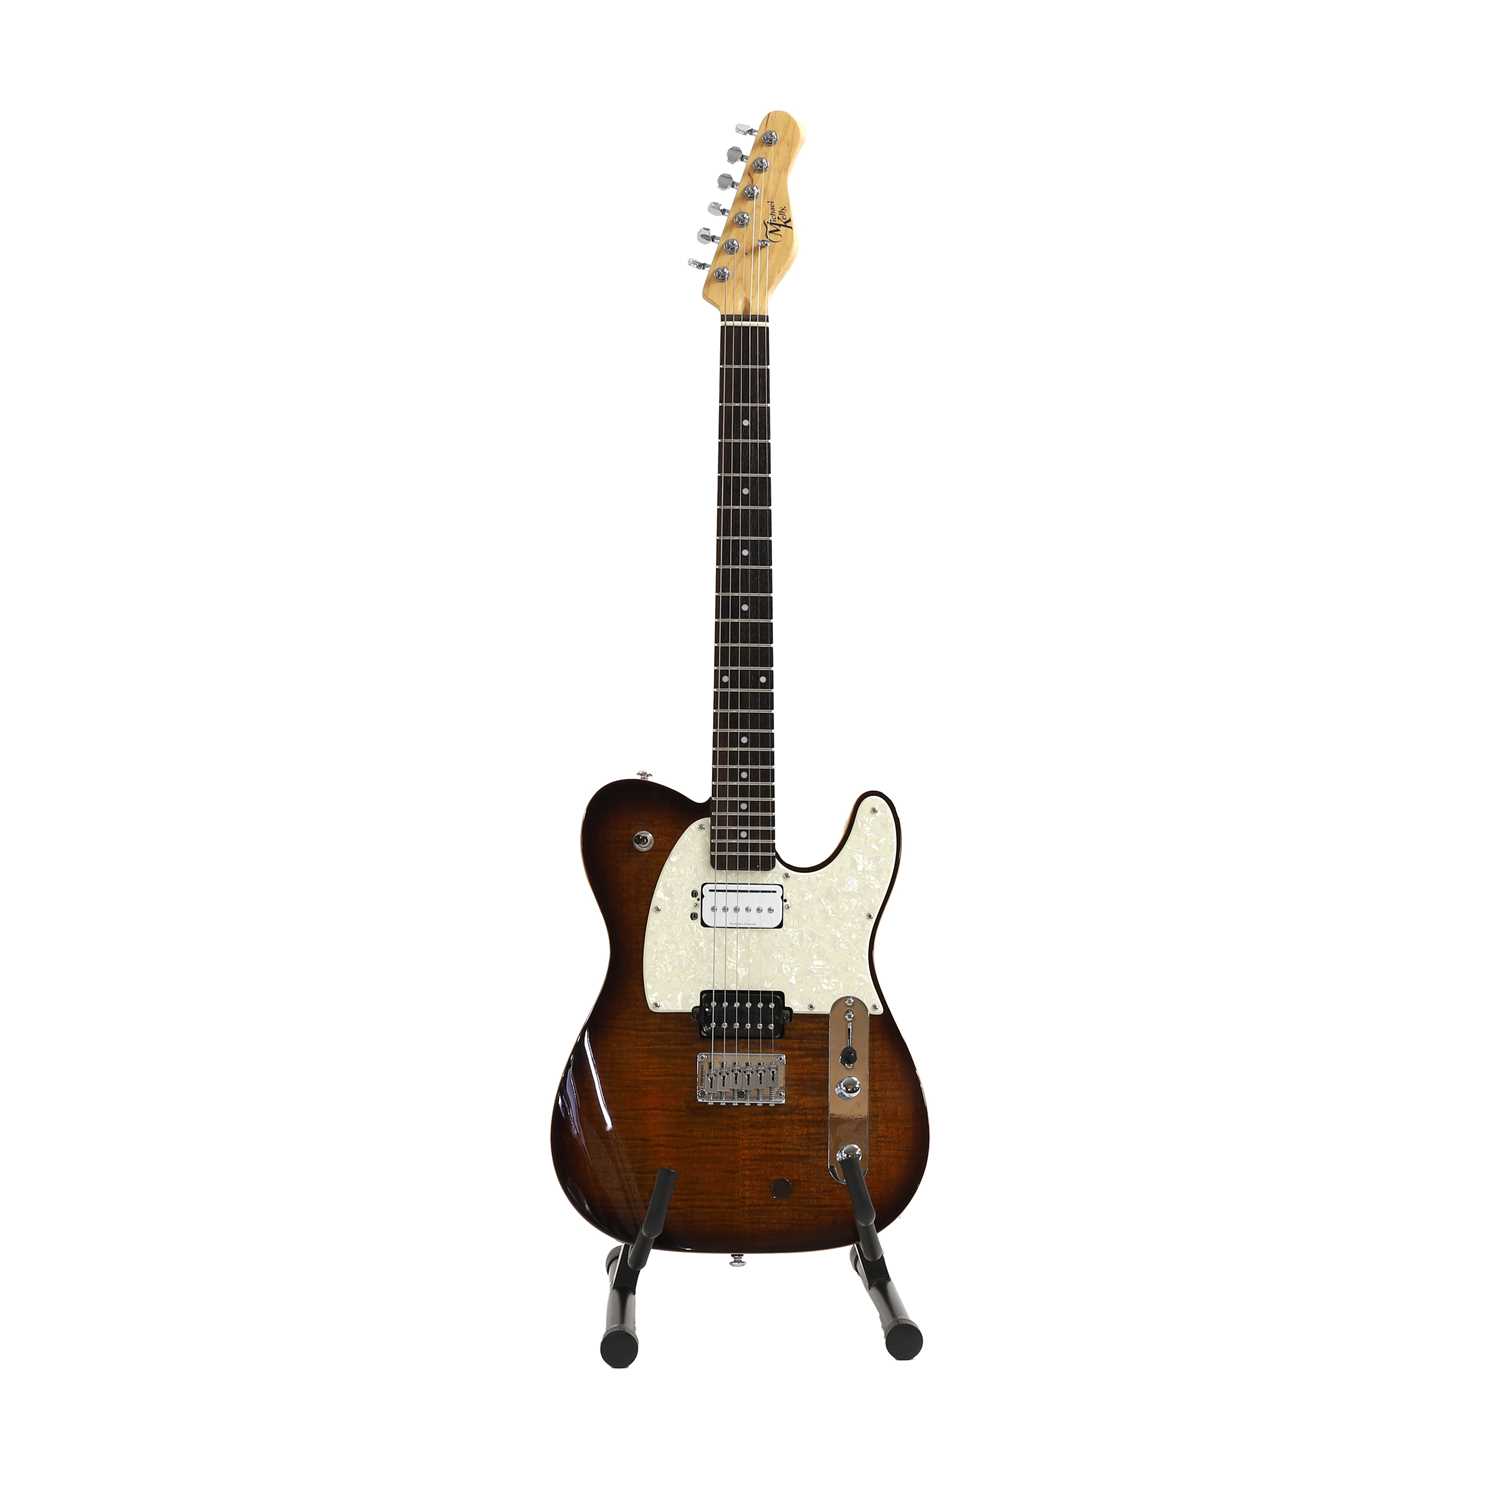 A Michael Kelly Robbie Gladwell custom hybrid electric guitar, - Image 4 of 13